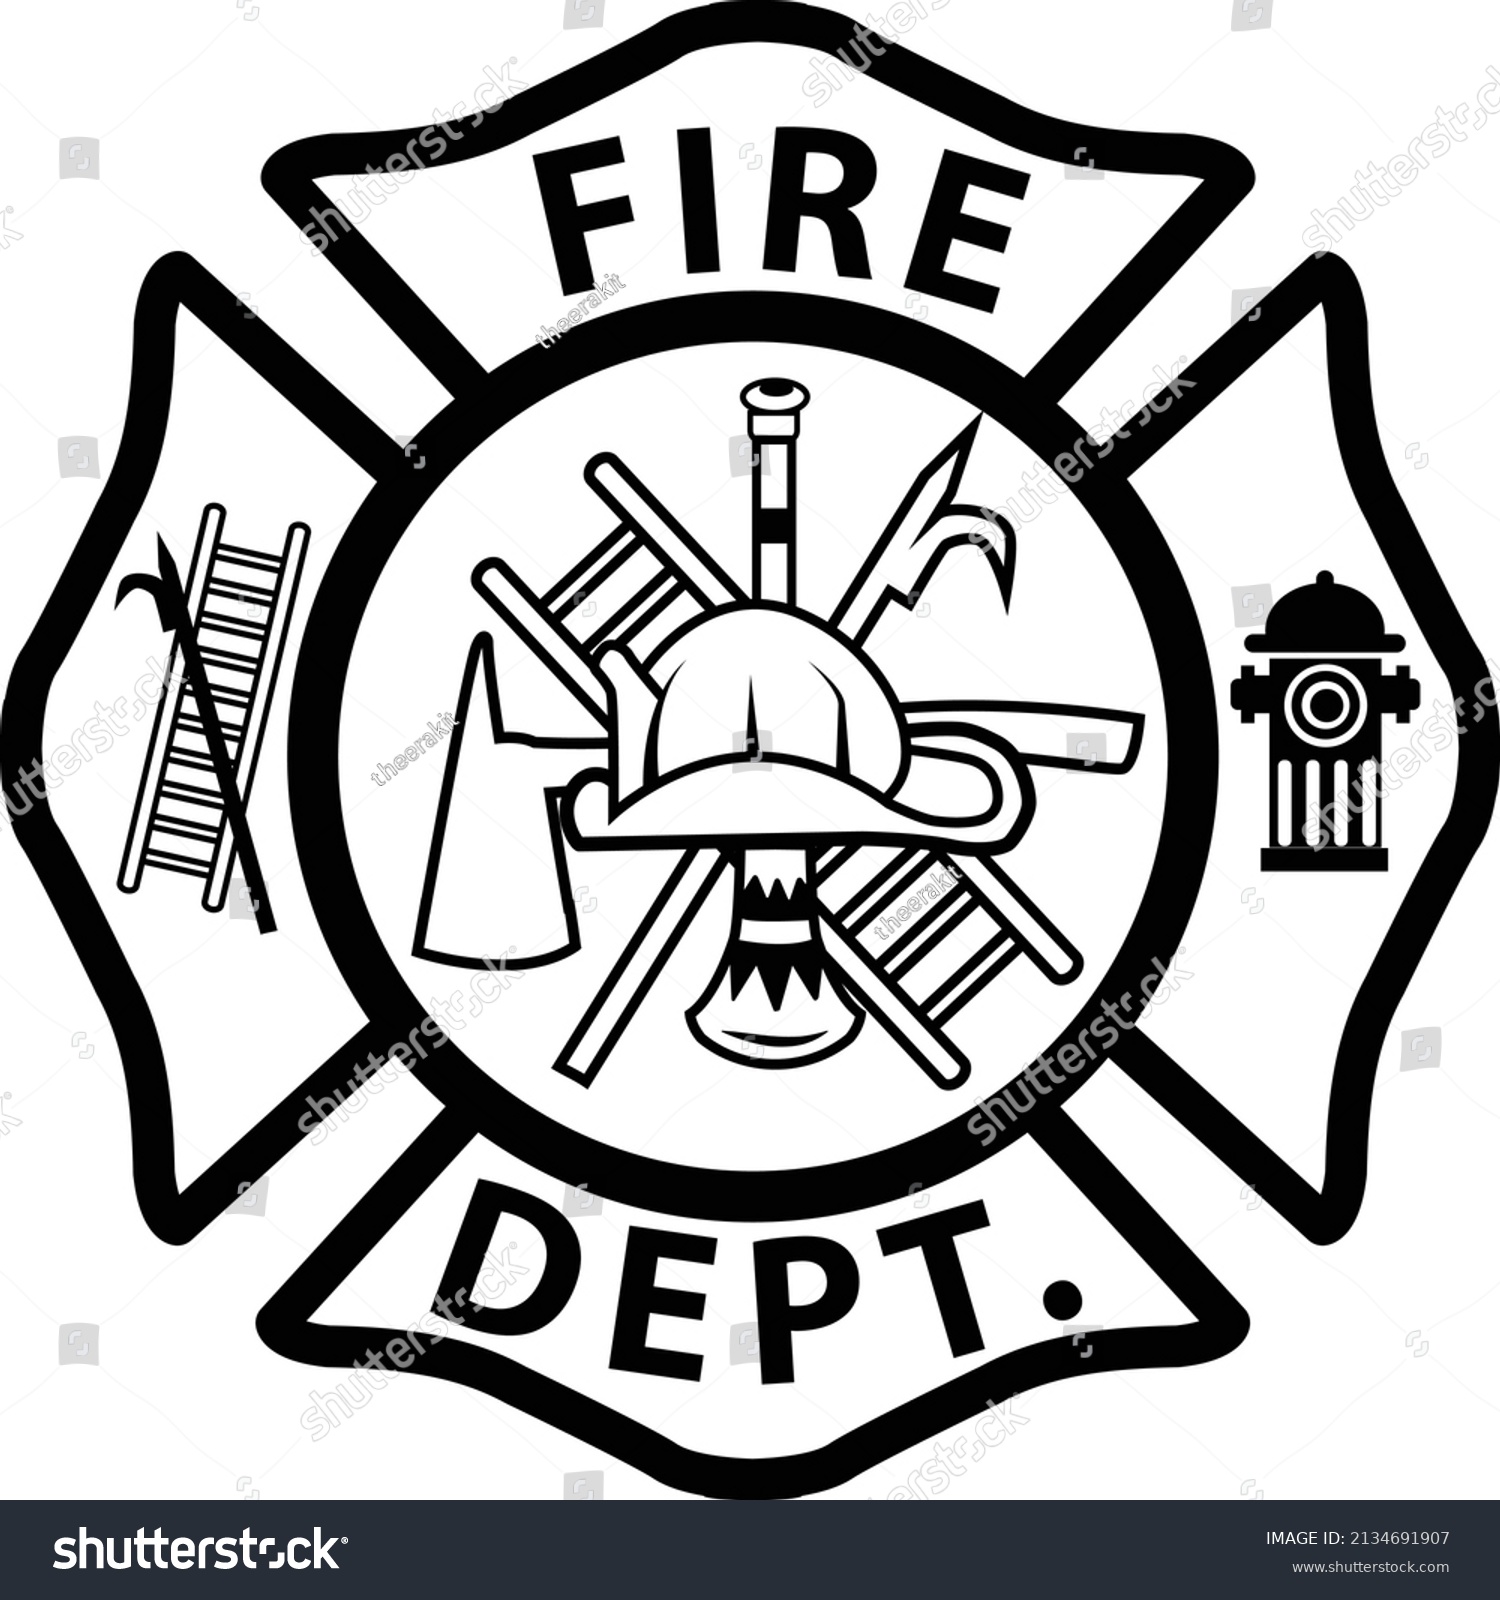 fireman emblem sign on white background. firefighter’s st florian maltese cross. fire department symbol. #2134691907